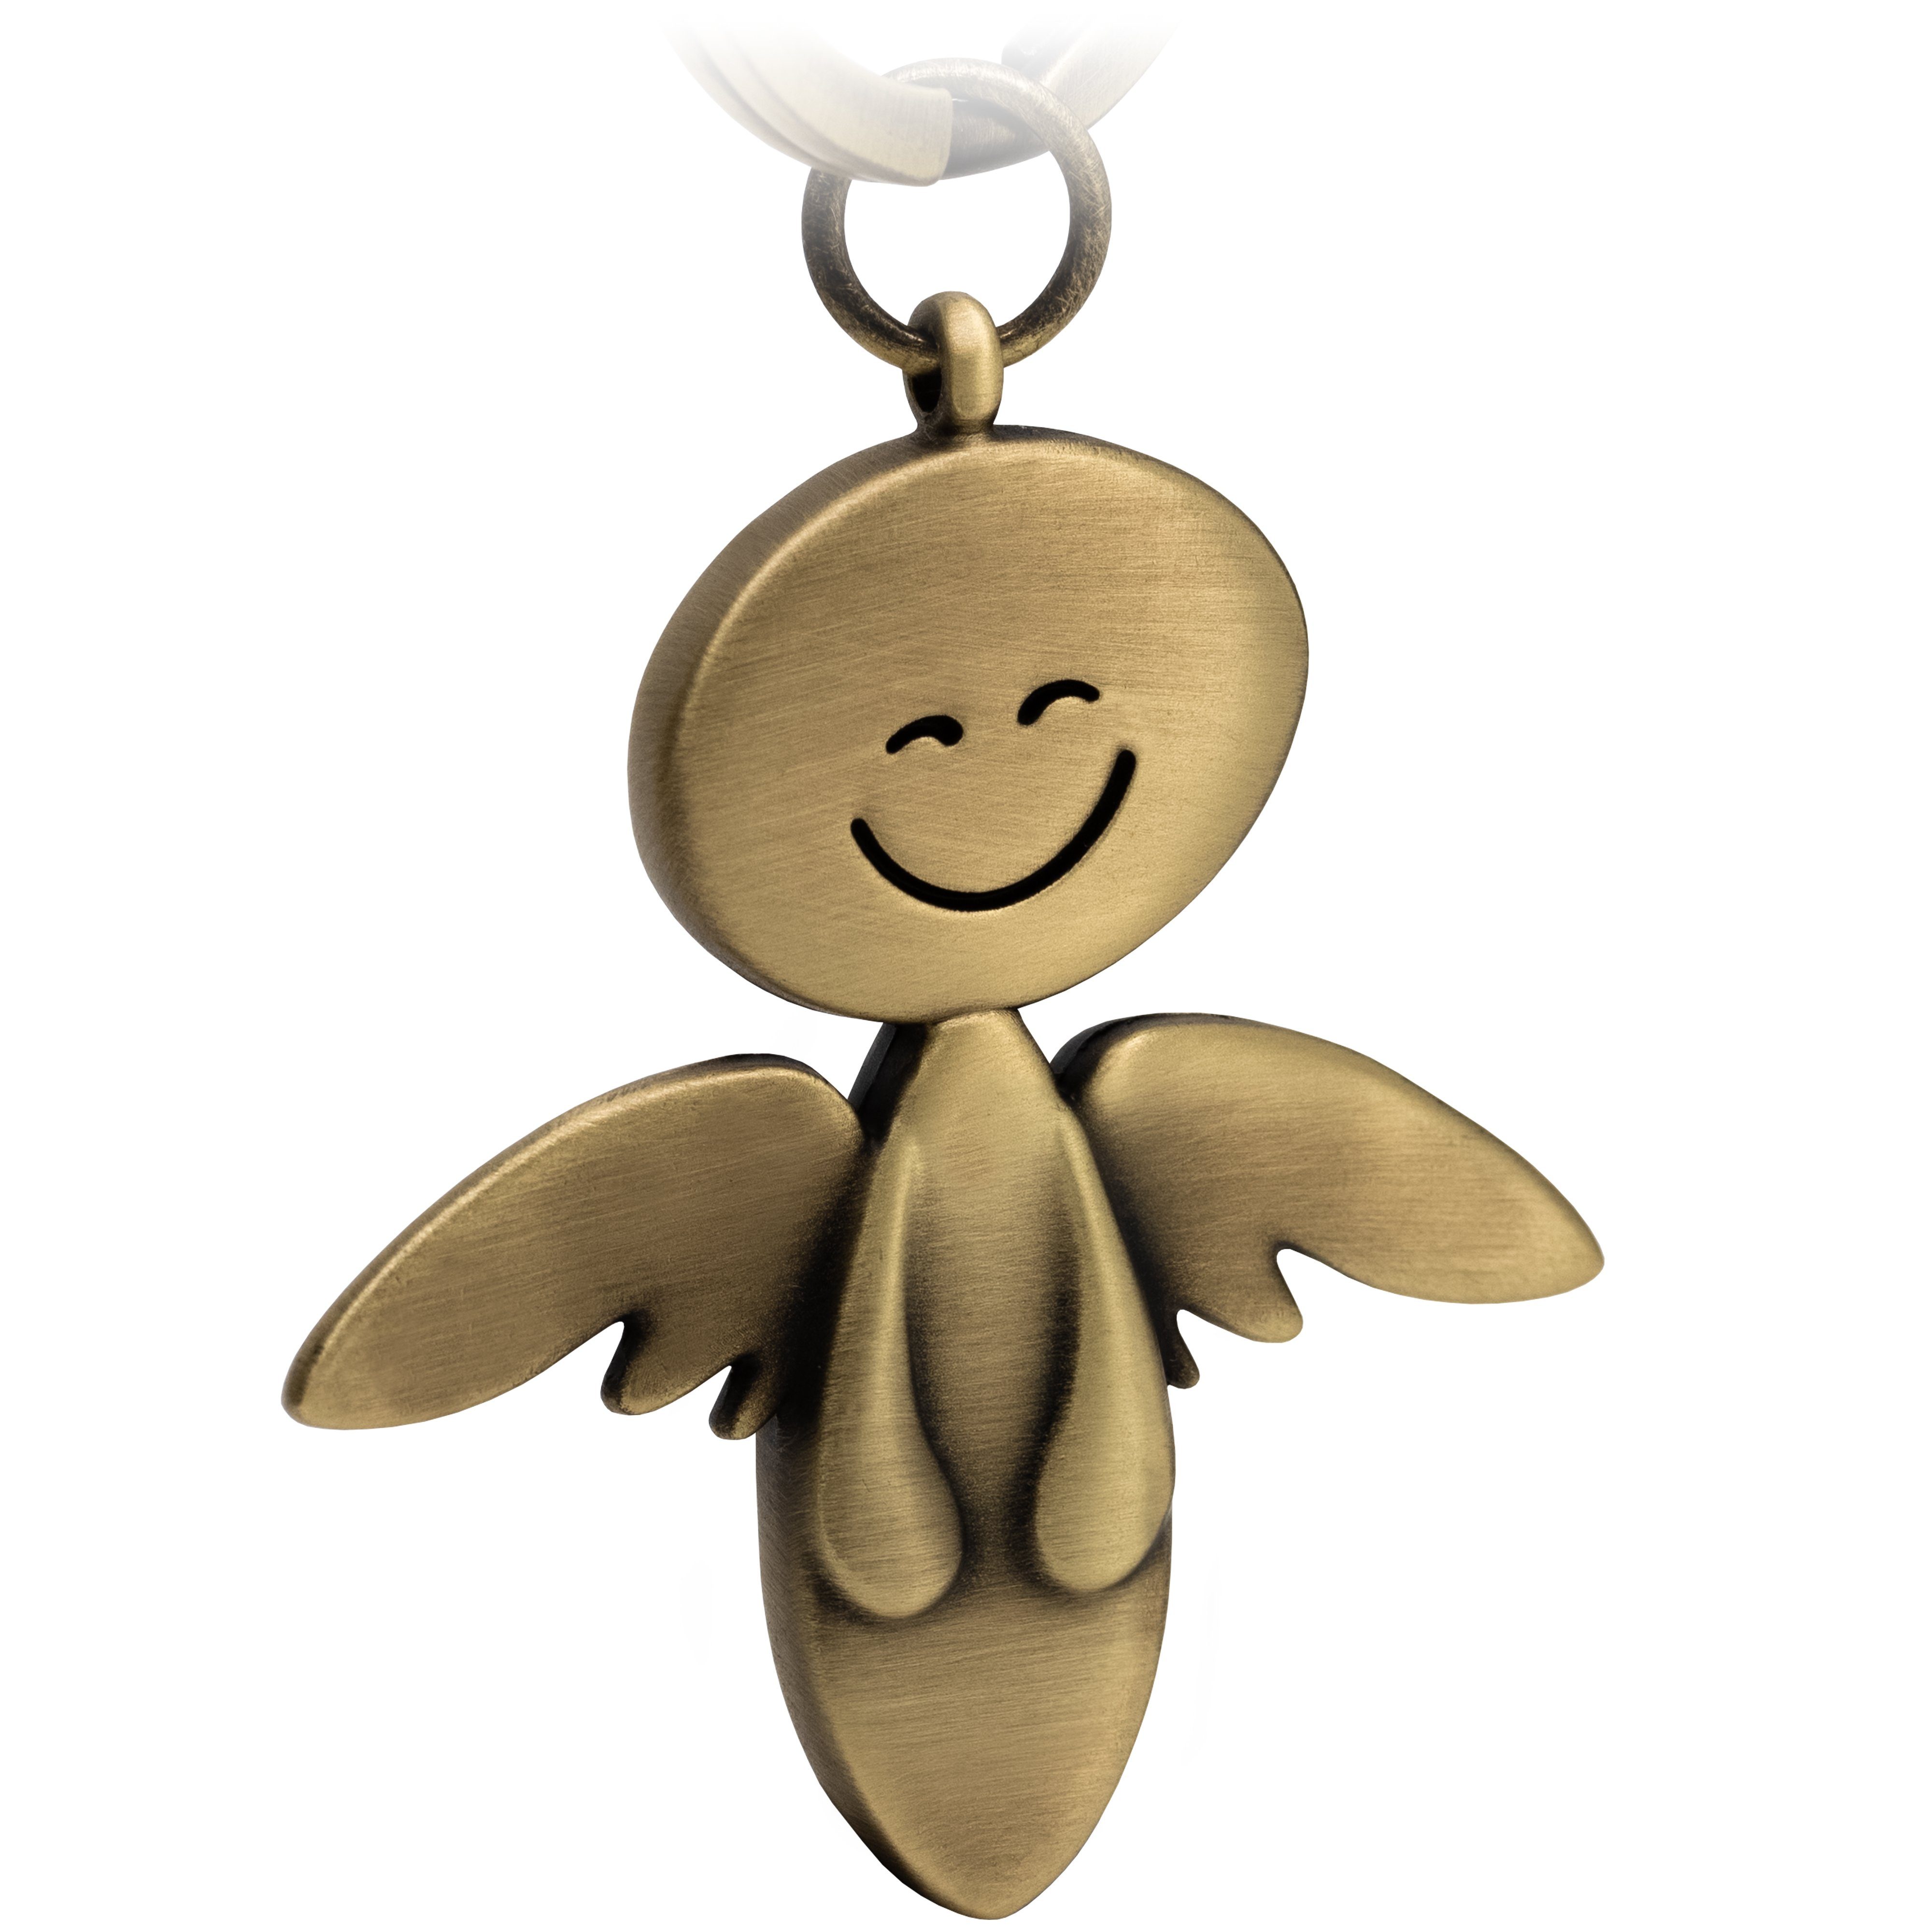 FABACH Schlüsselanhänger Schutzengel Smile - Engel Anhänger aus Metall - Geschenk Glücksbringer Antique Bronze